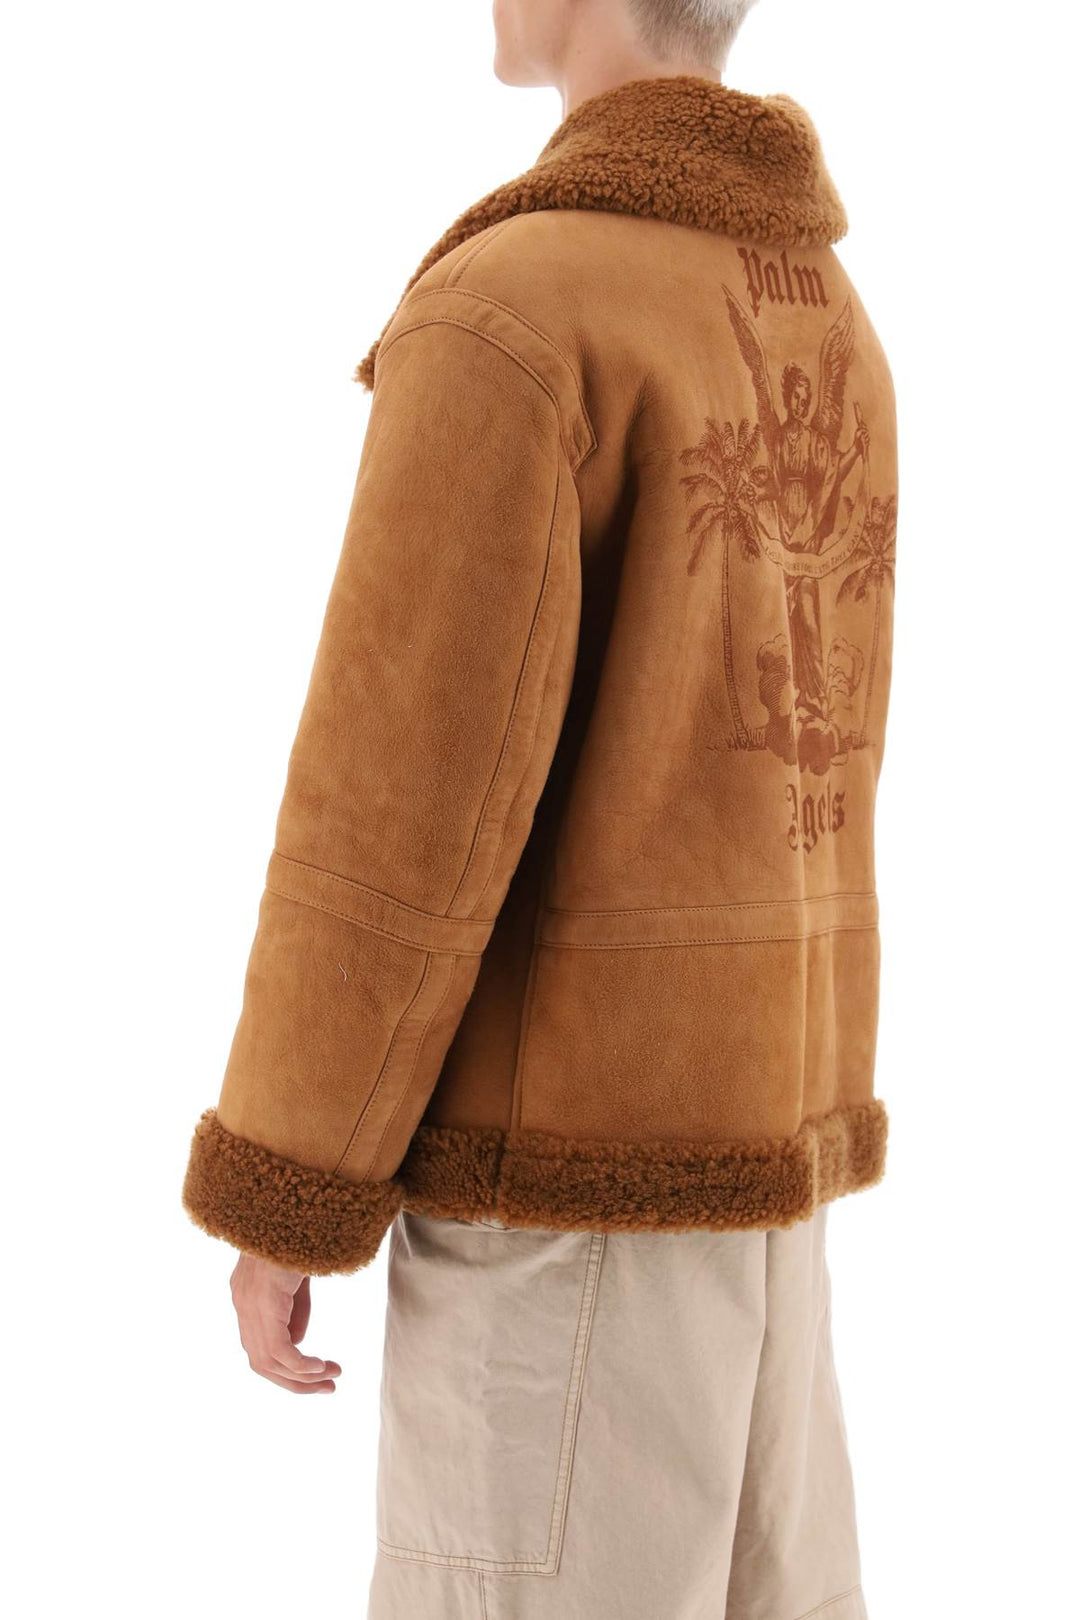 Palm Angels University Shearling Jacket   Marrone